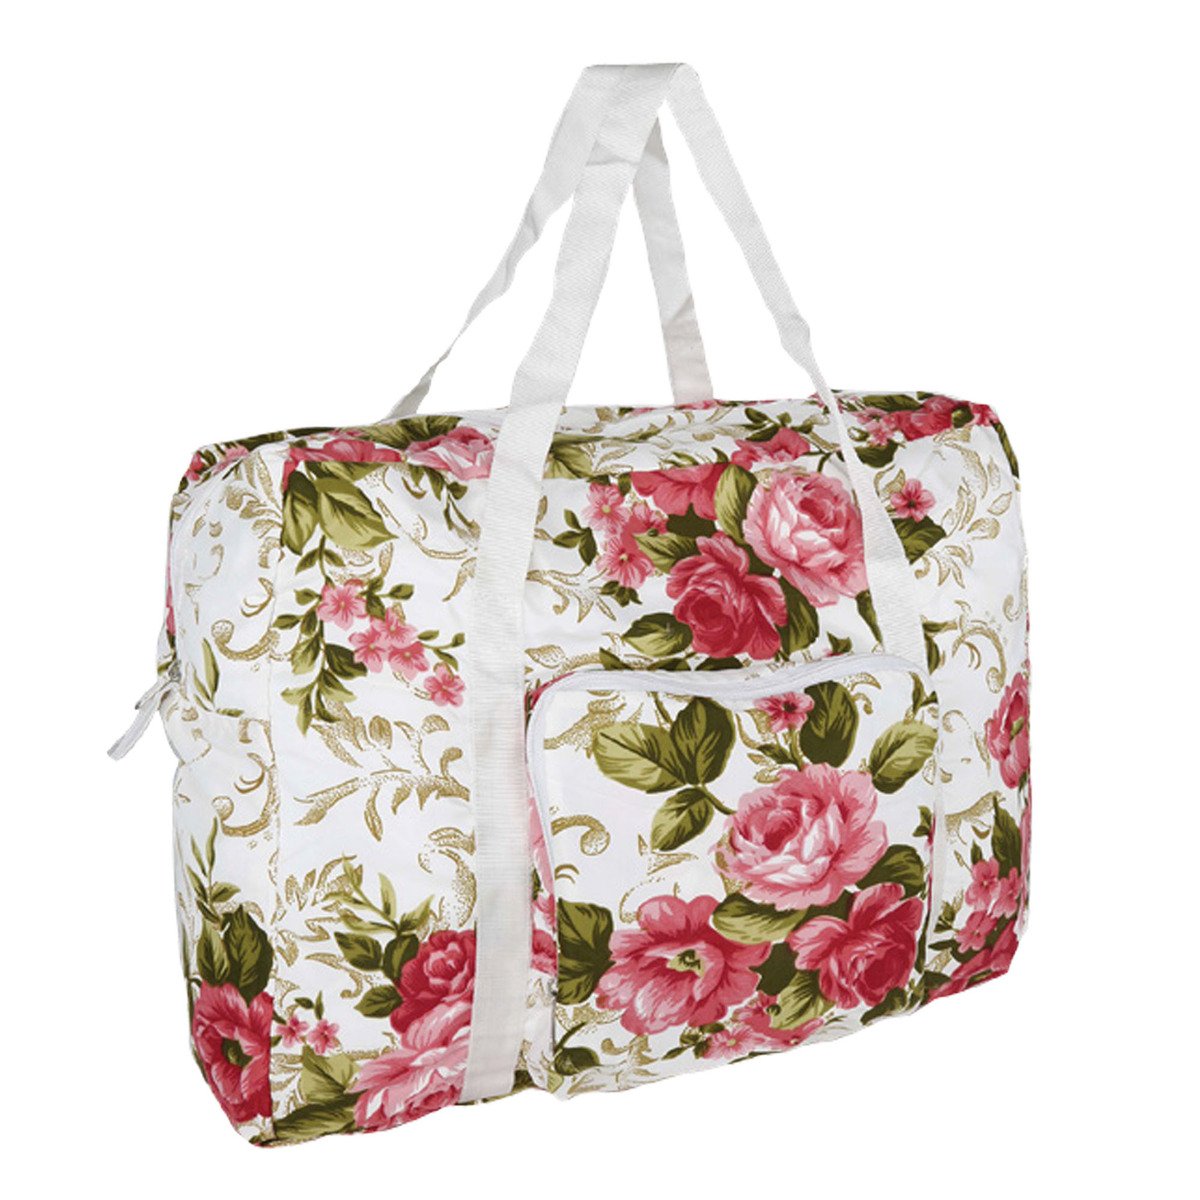 Wagon R Foldable Bag Floral DL04 Assorted